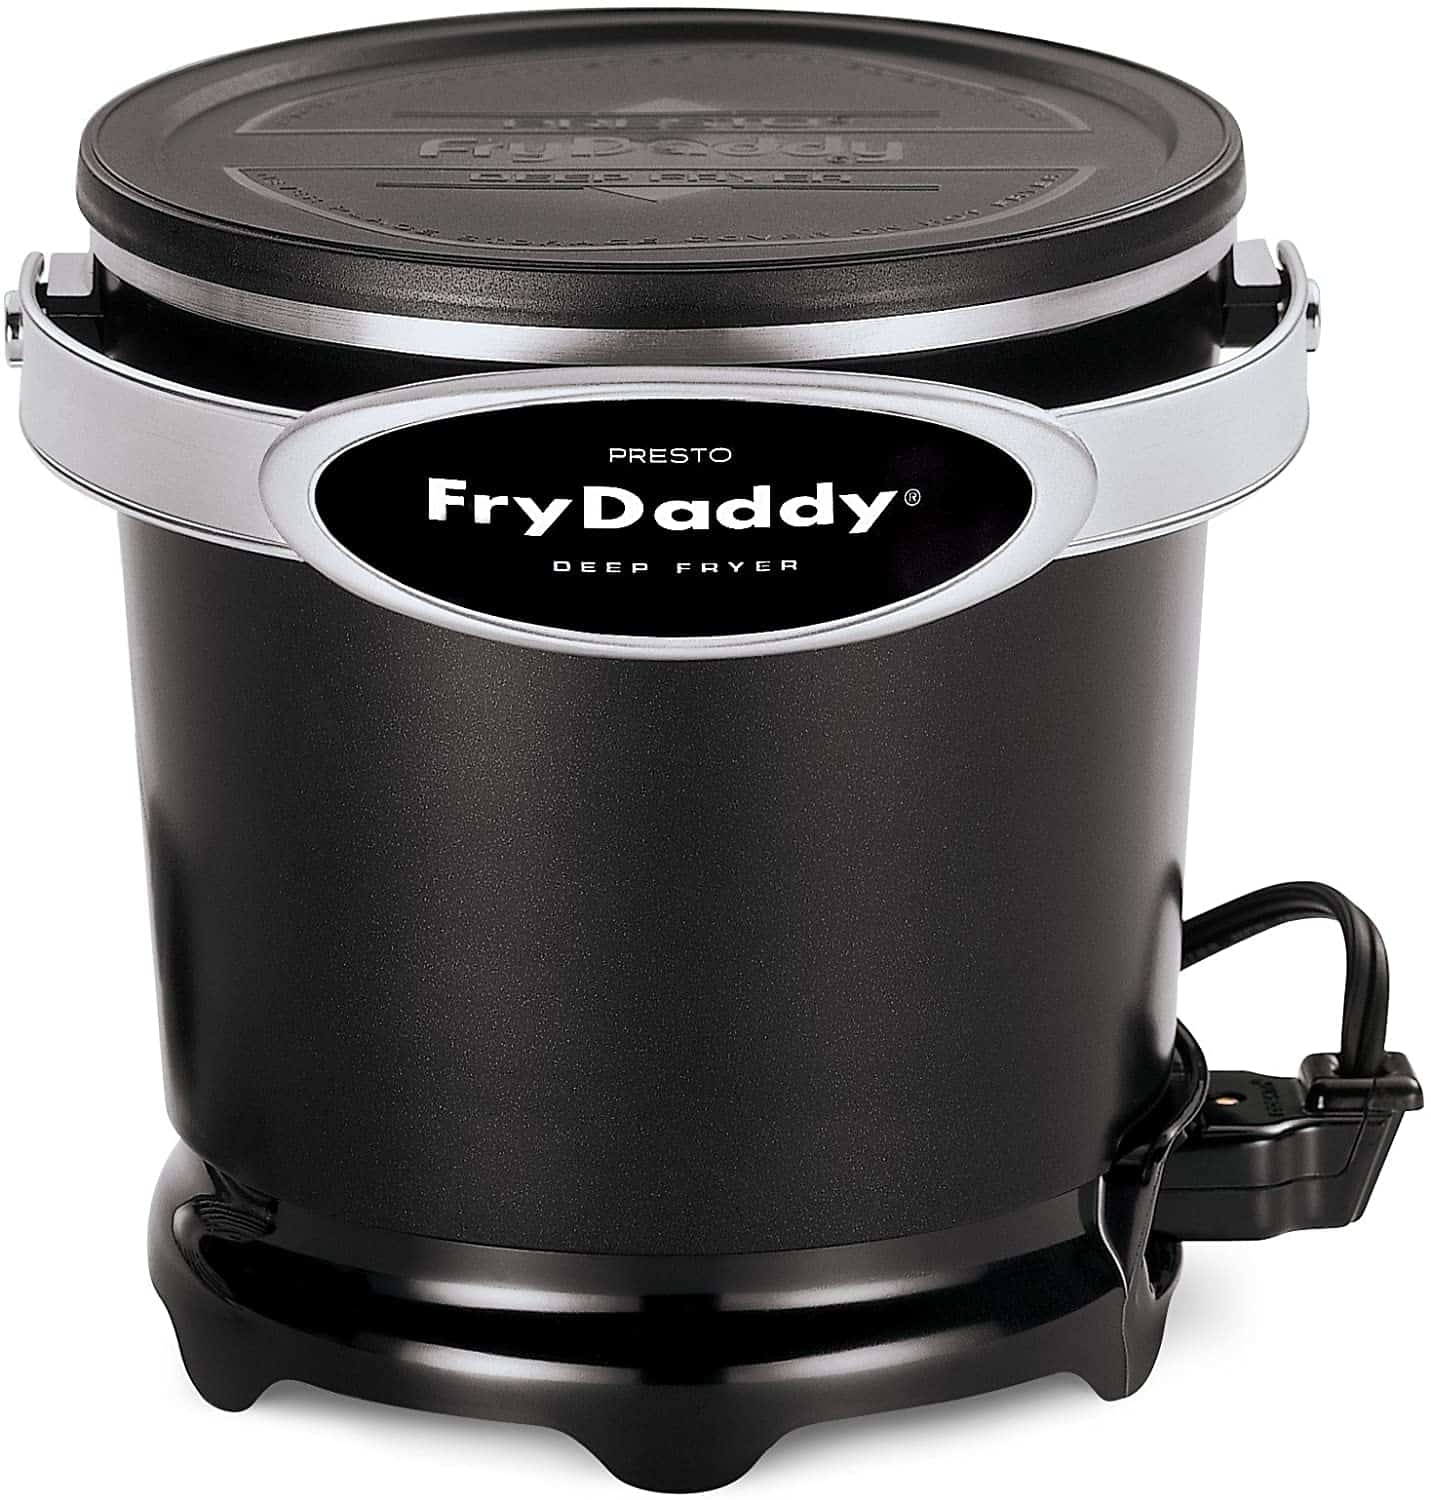 Presto FryDaddy Electric Deep Fryer ONLY $24.99 + Free Shipping